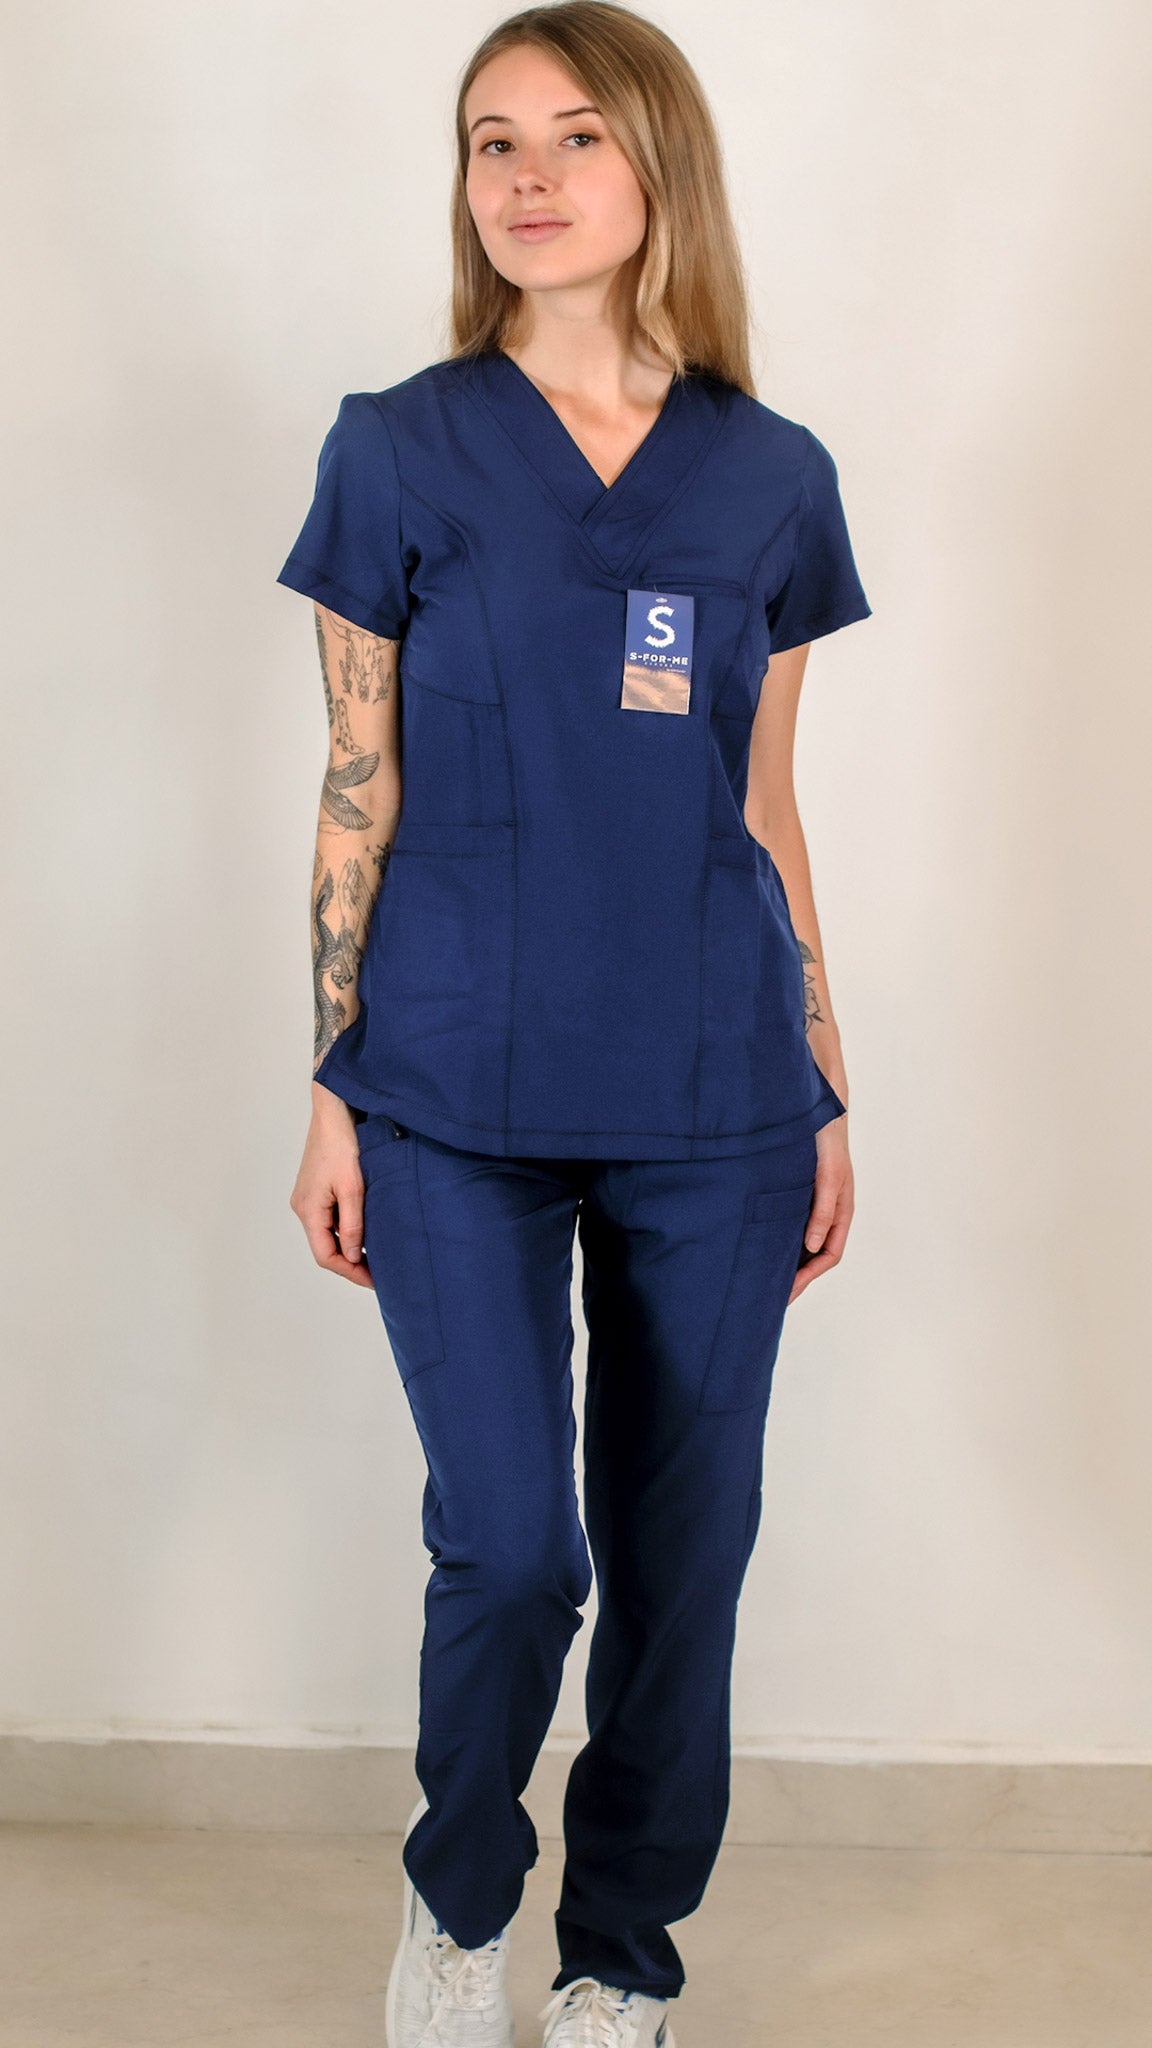  uniformes quirúrgicos mujer